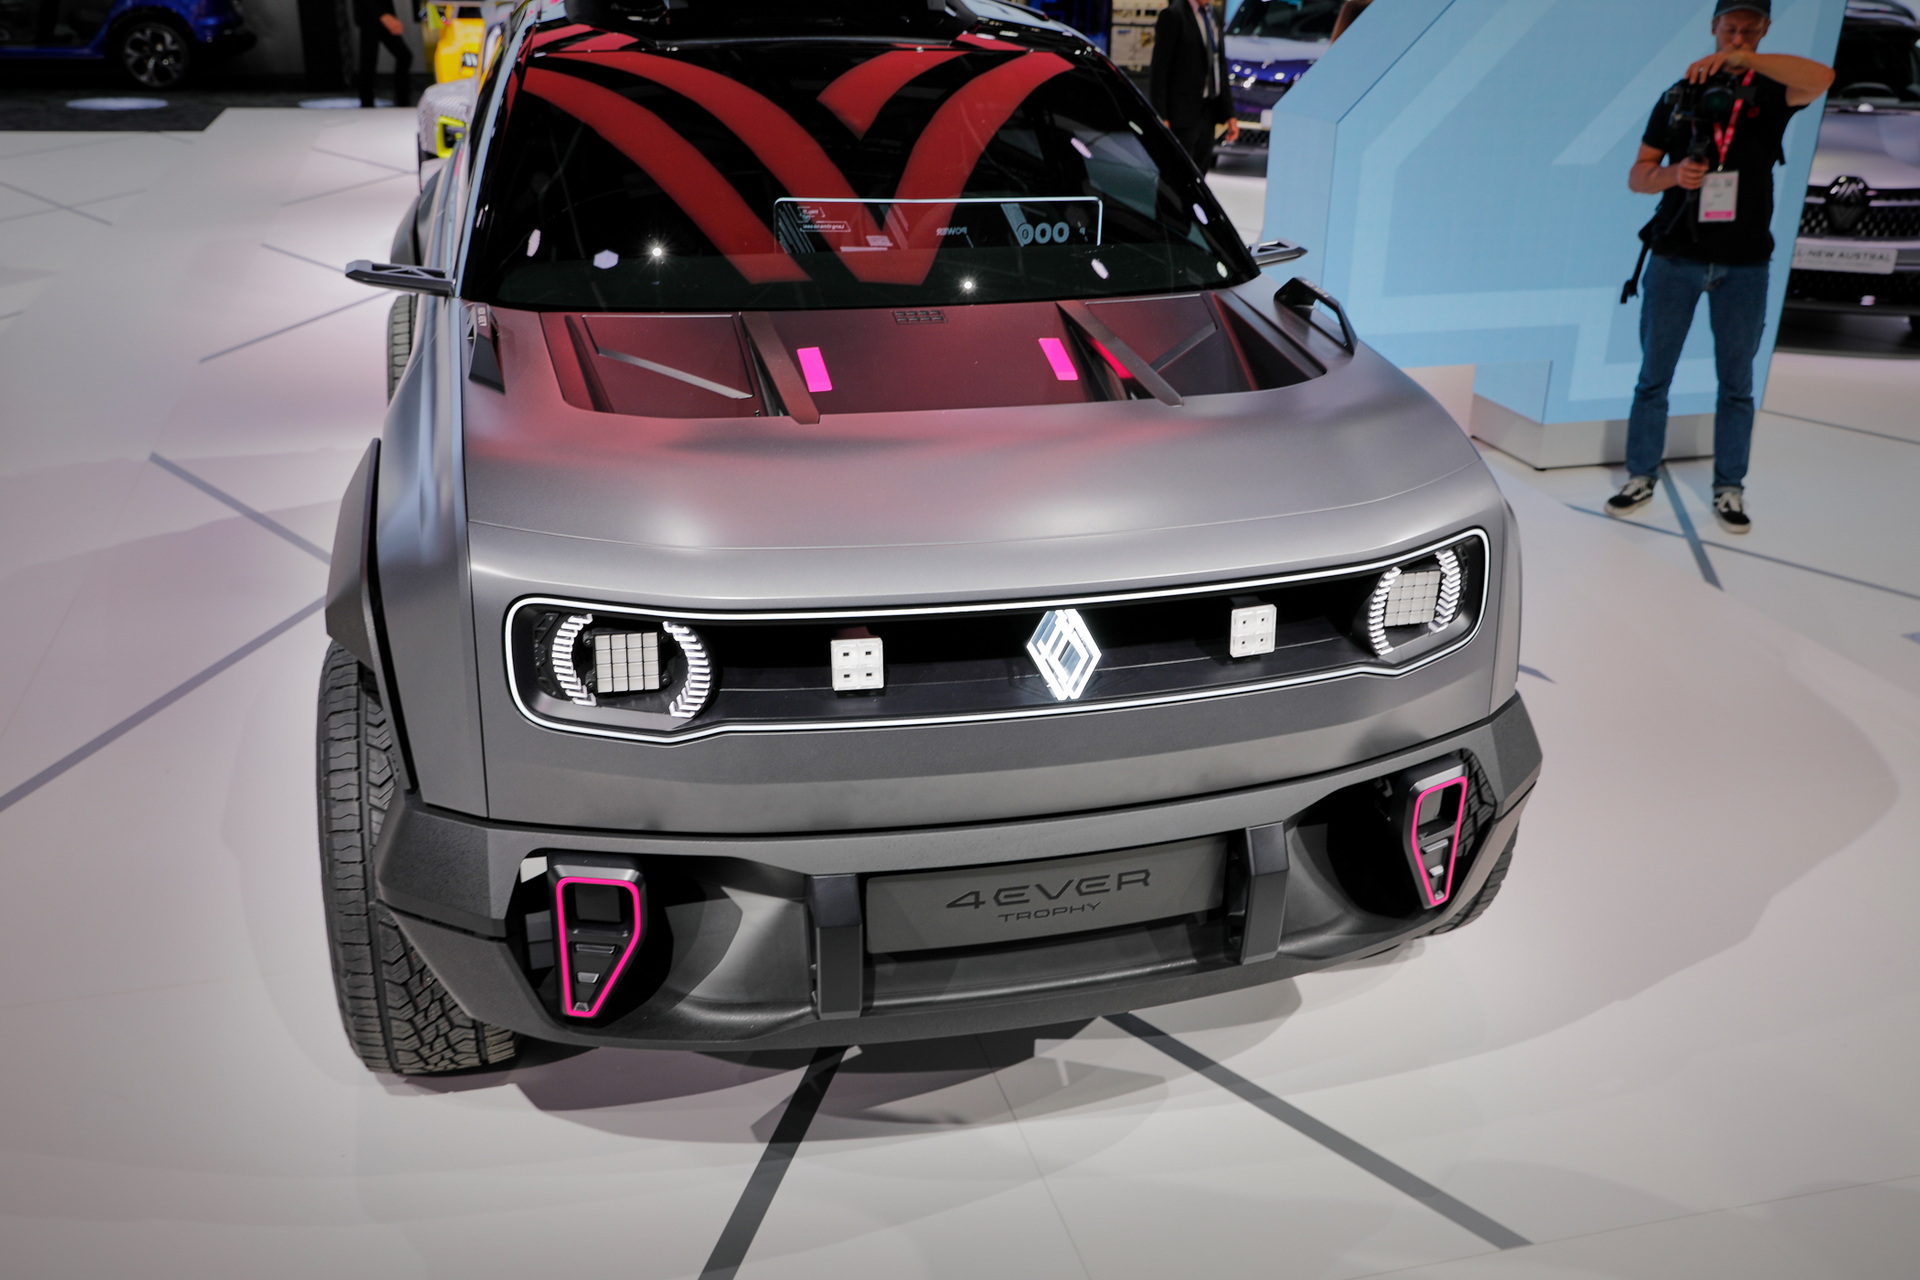 Renault 4Ever Trophy Concept resim galerisi (20.10.2022)